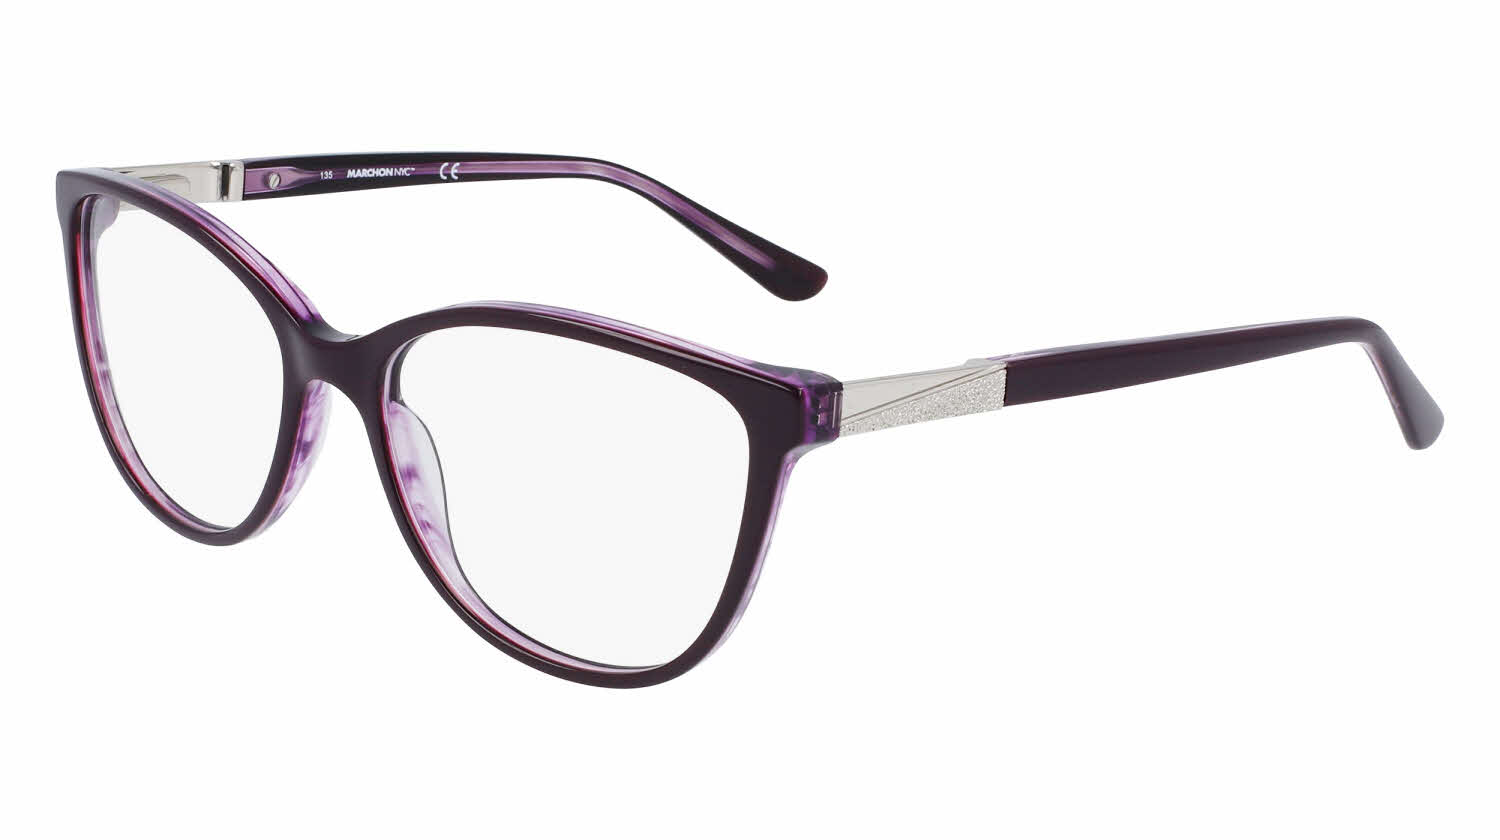 Marchon M-5011 Eyeglasses